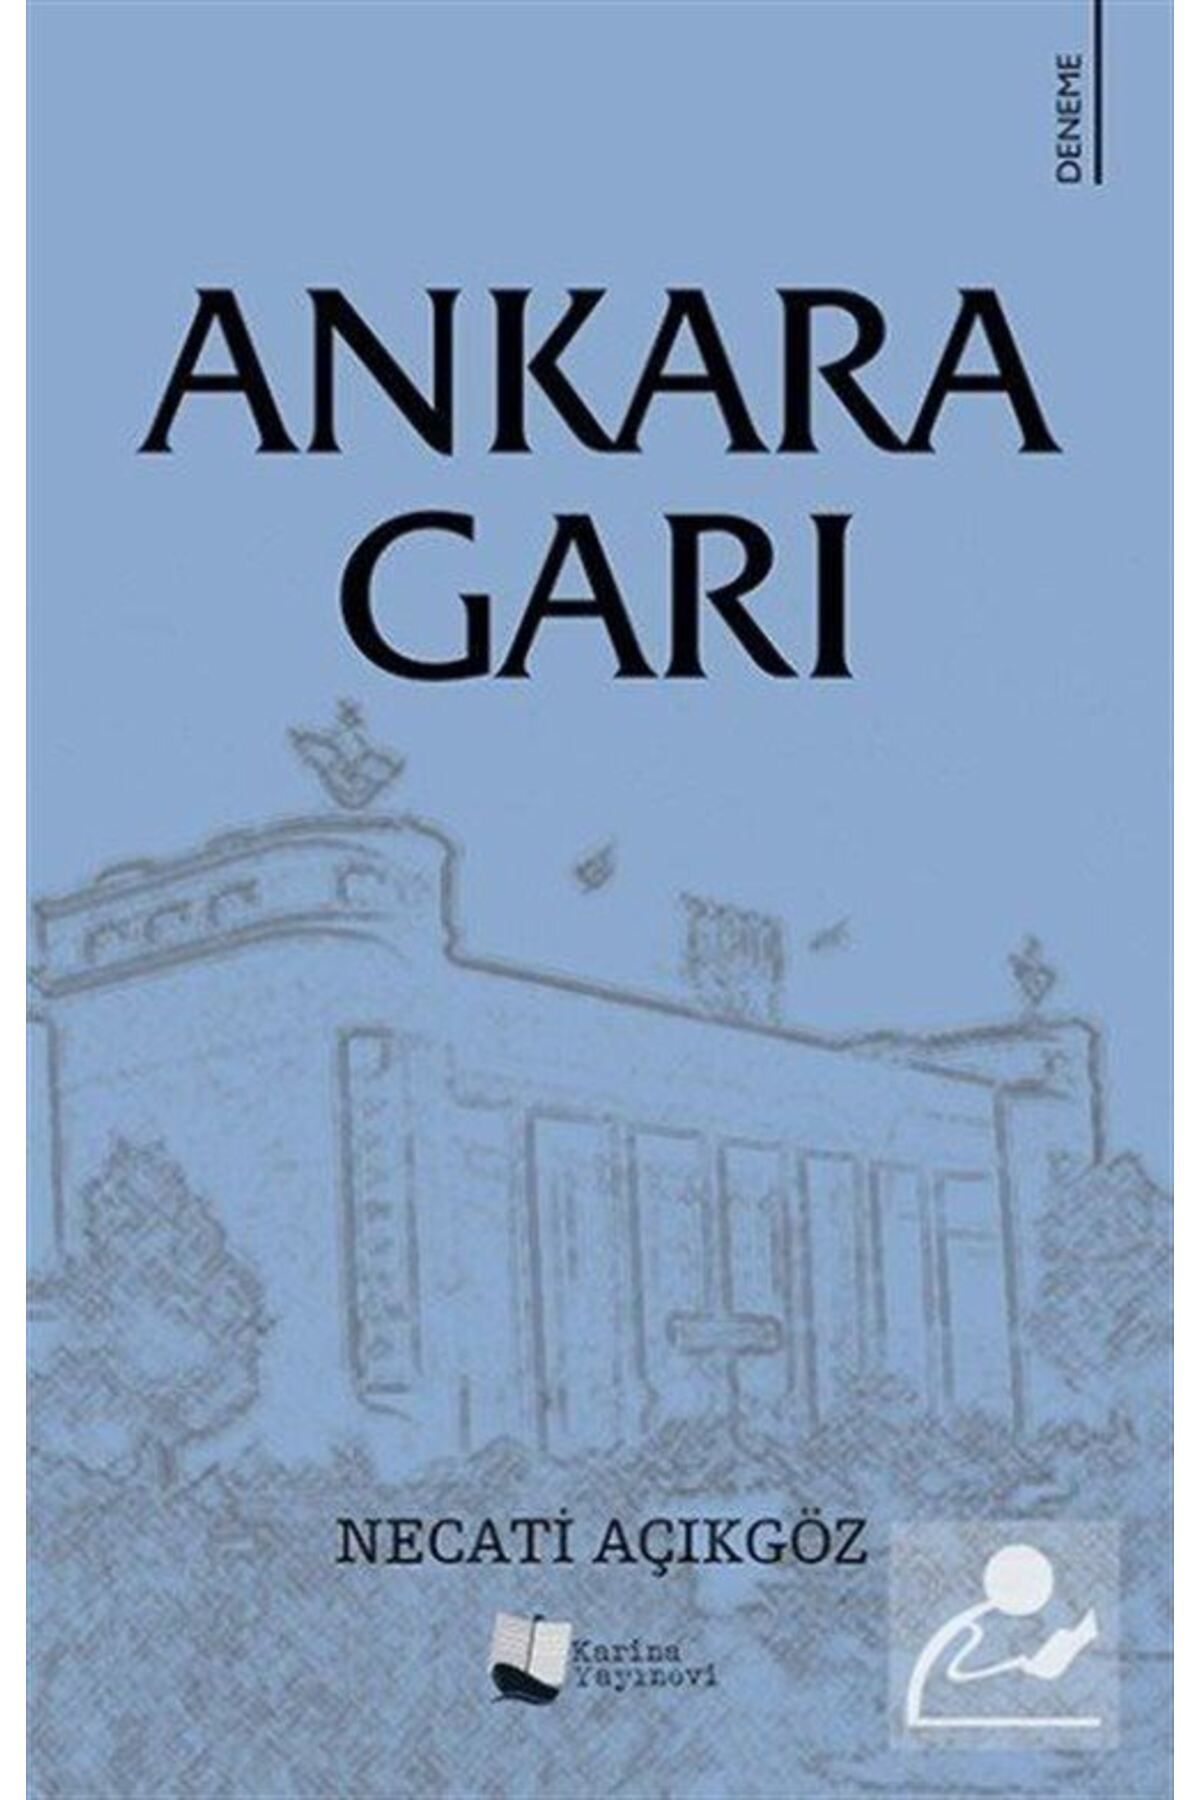 Karina Yayınevi Ankara Garı